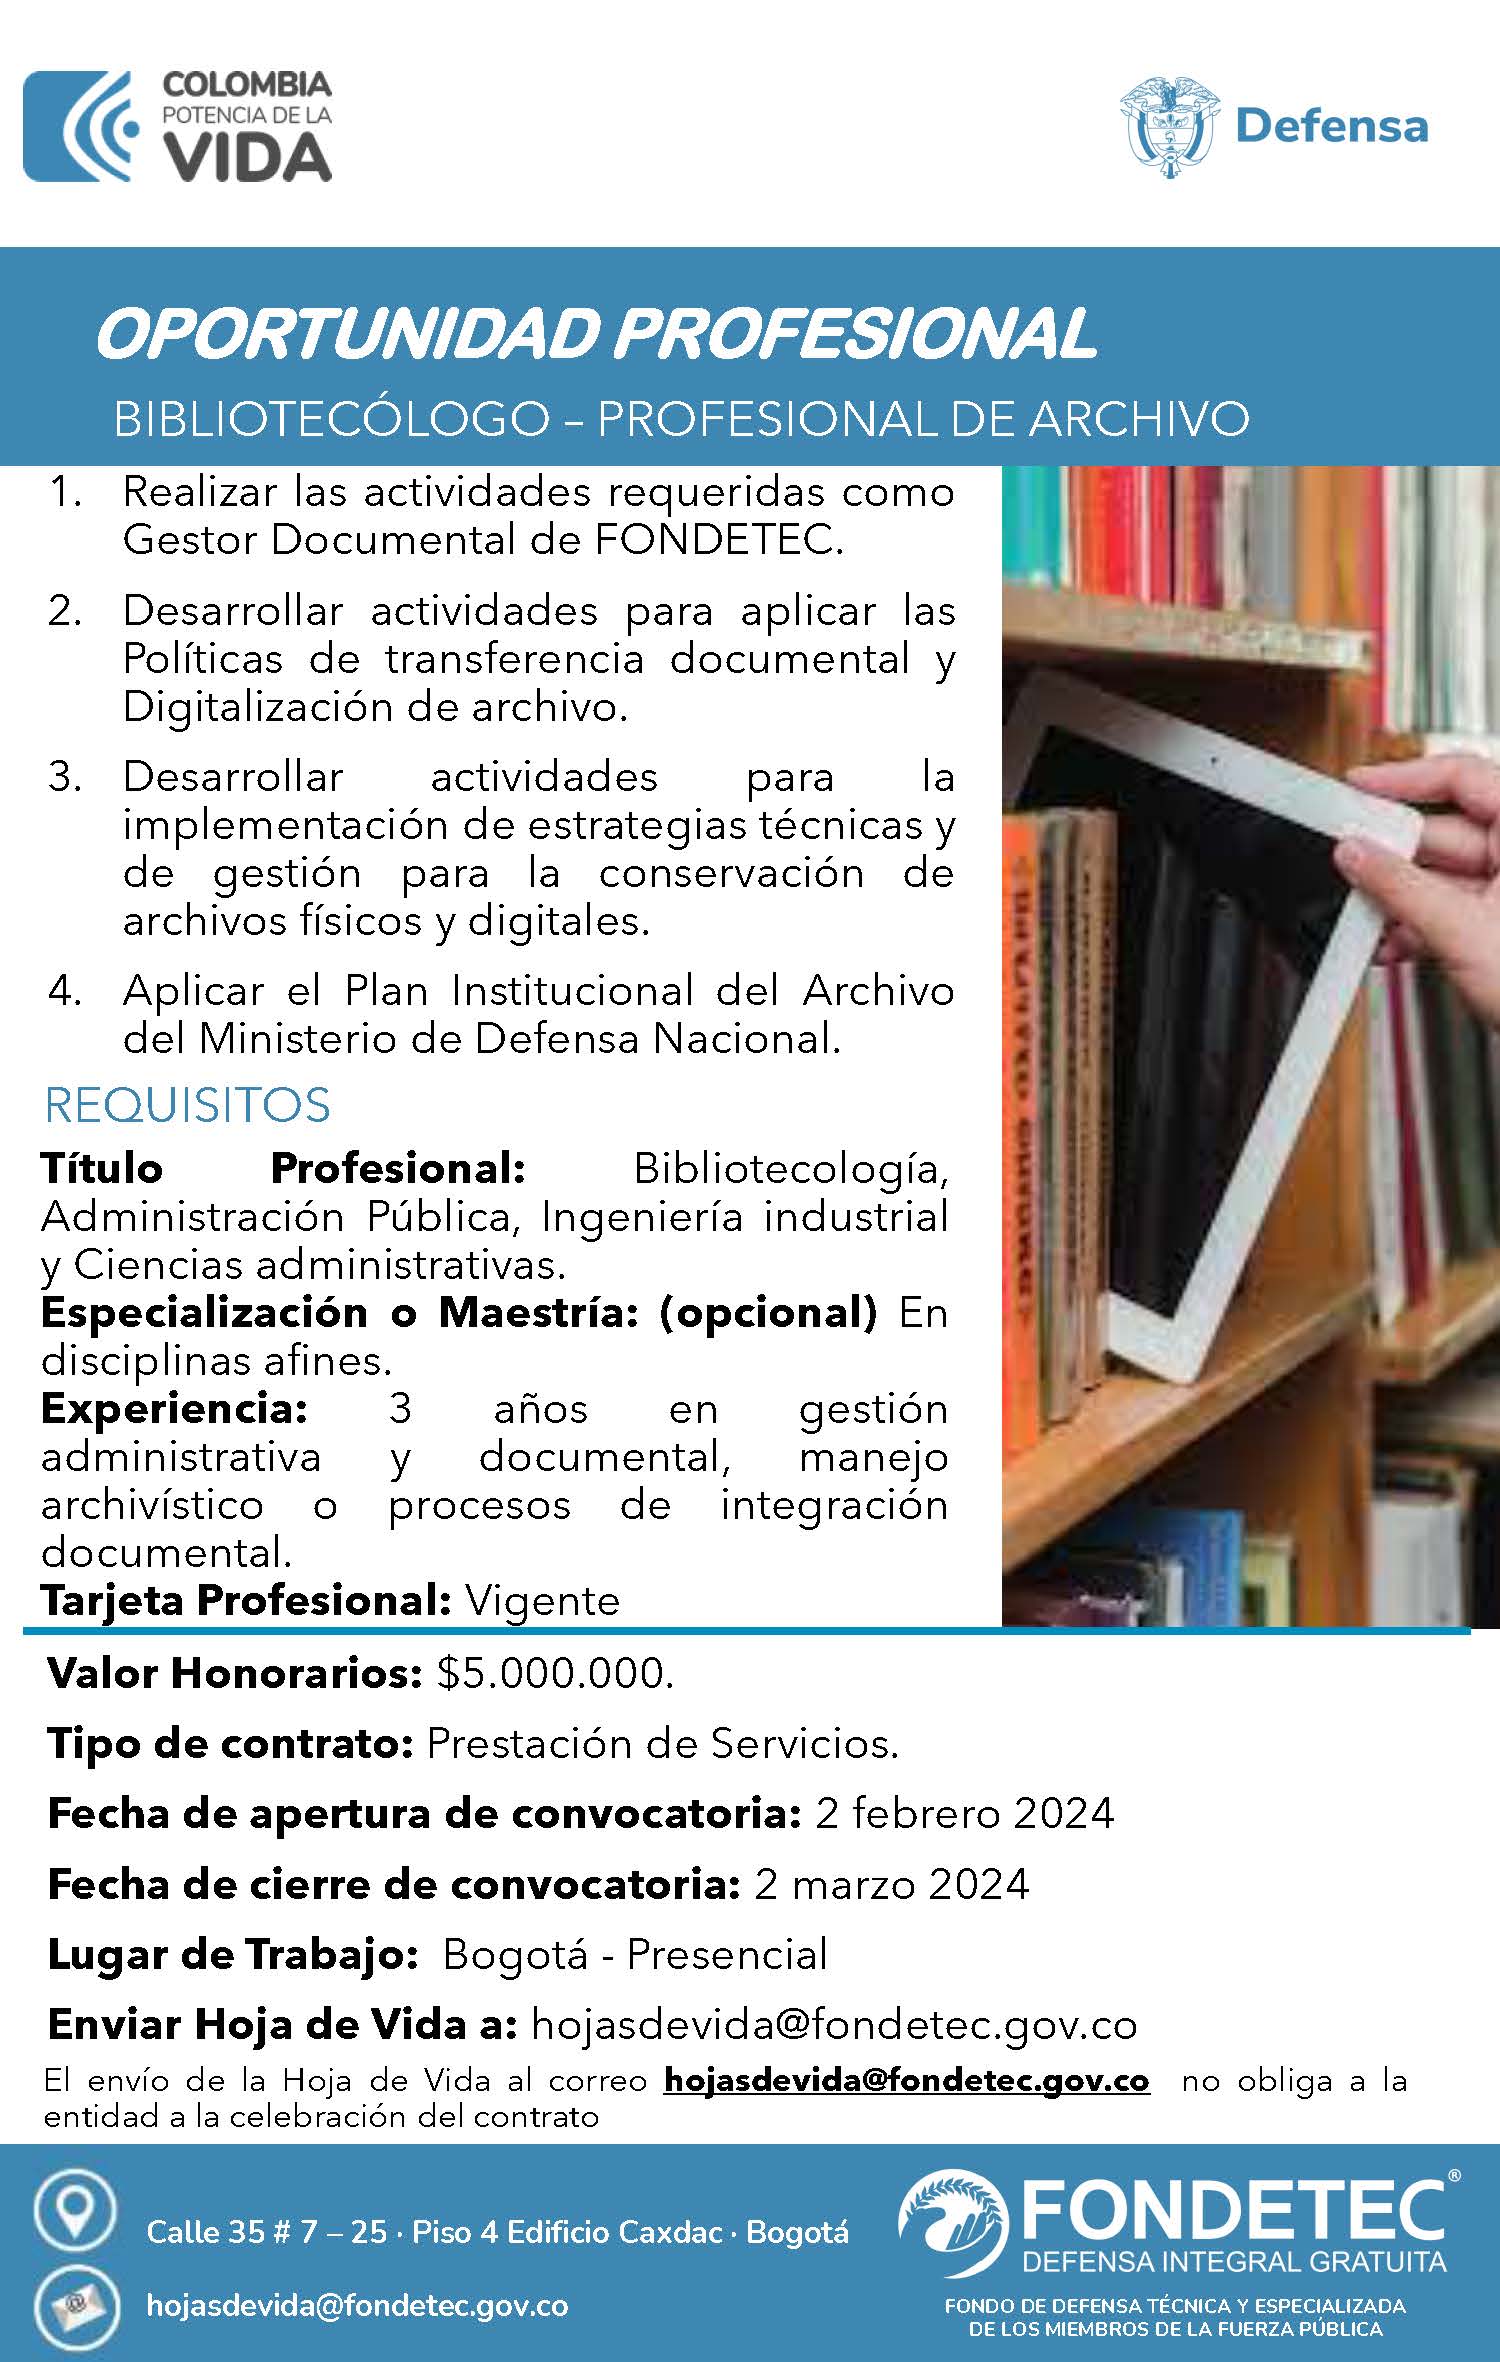 Bibliotecólogo Profesional de Archivo